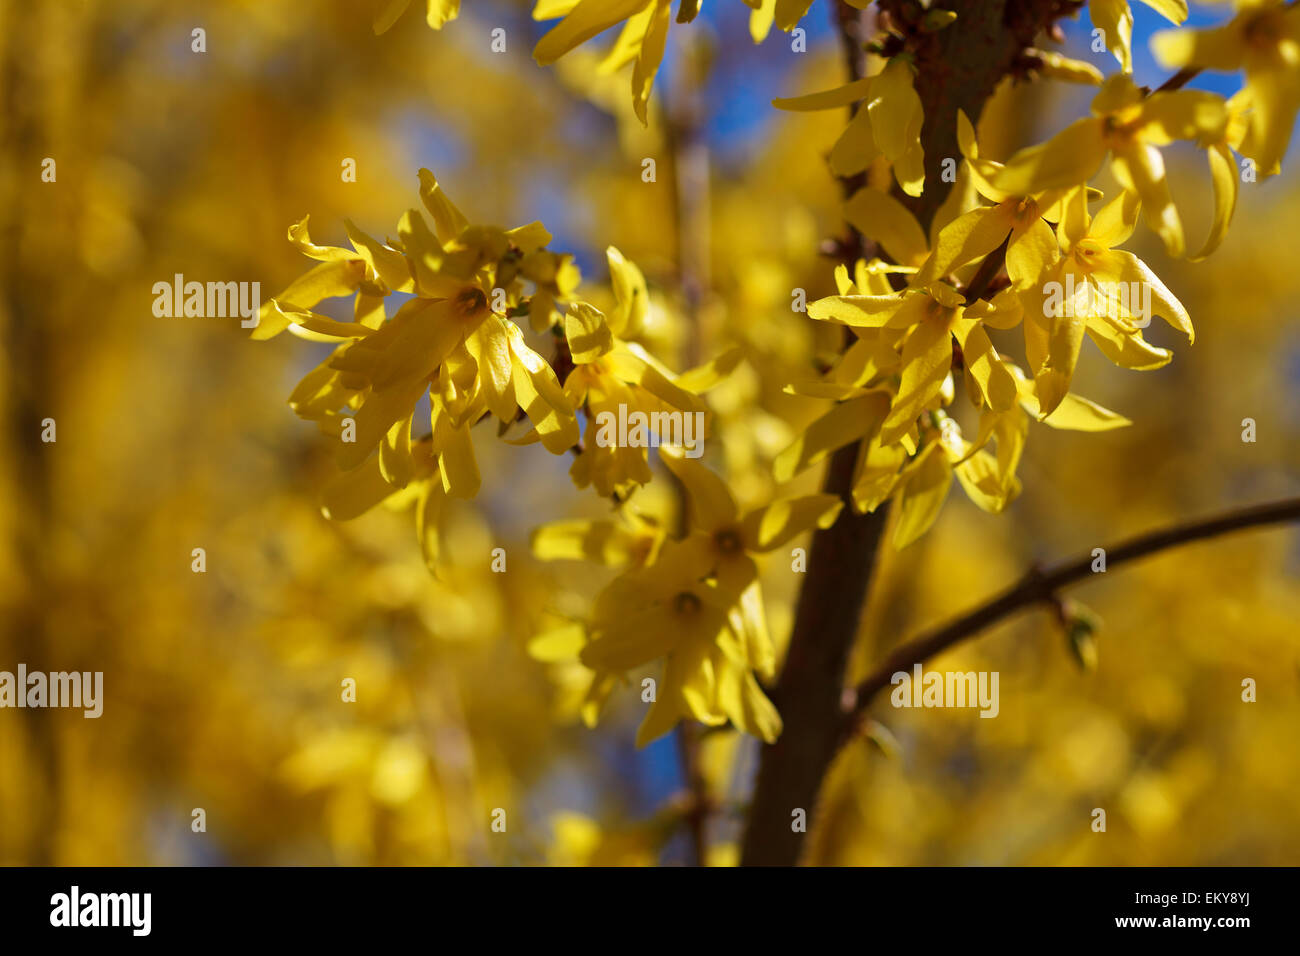 Forsythia flowers full of yellow tiny flowers macro against yellow blurred background, spring season in Poland, Europe Stock Photo